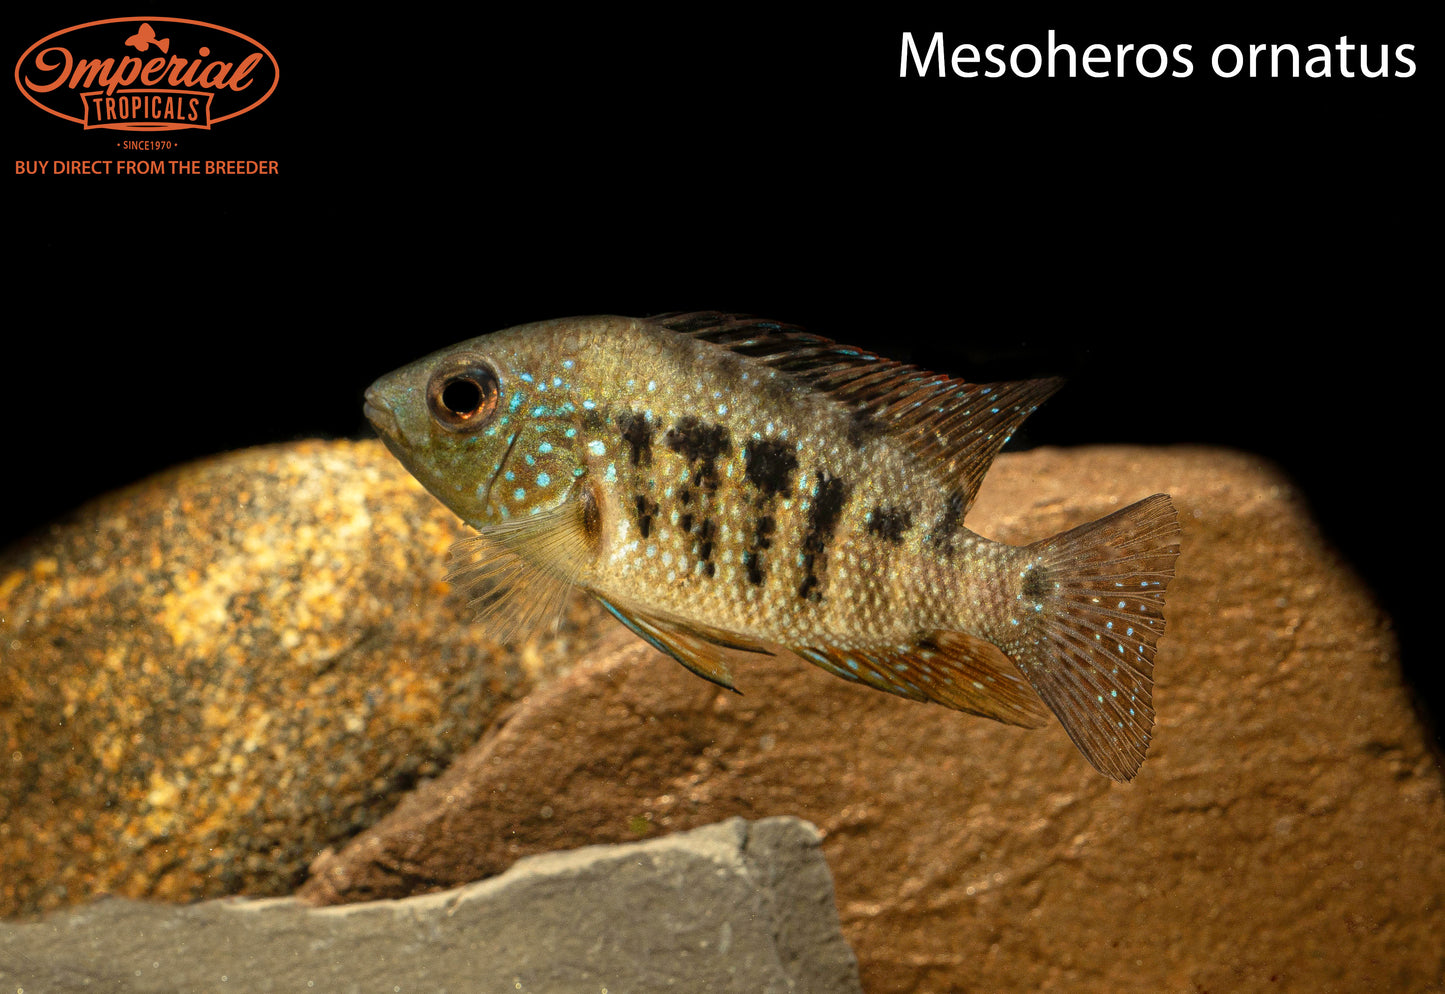 Mesoheros ornatus